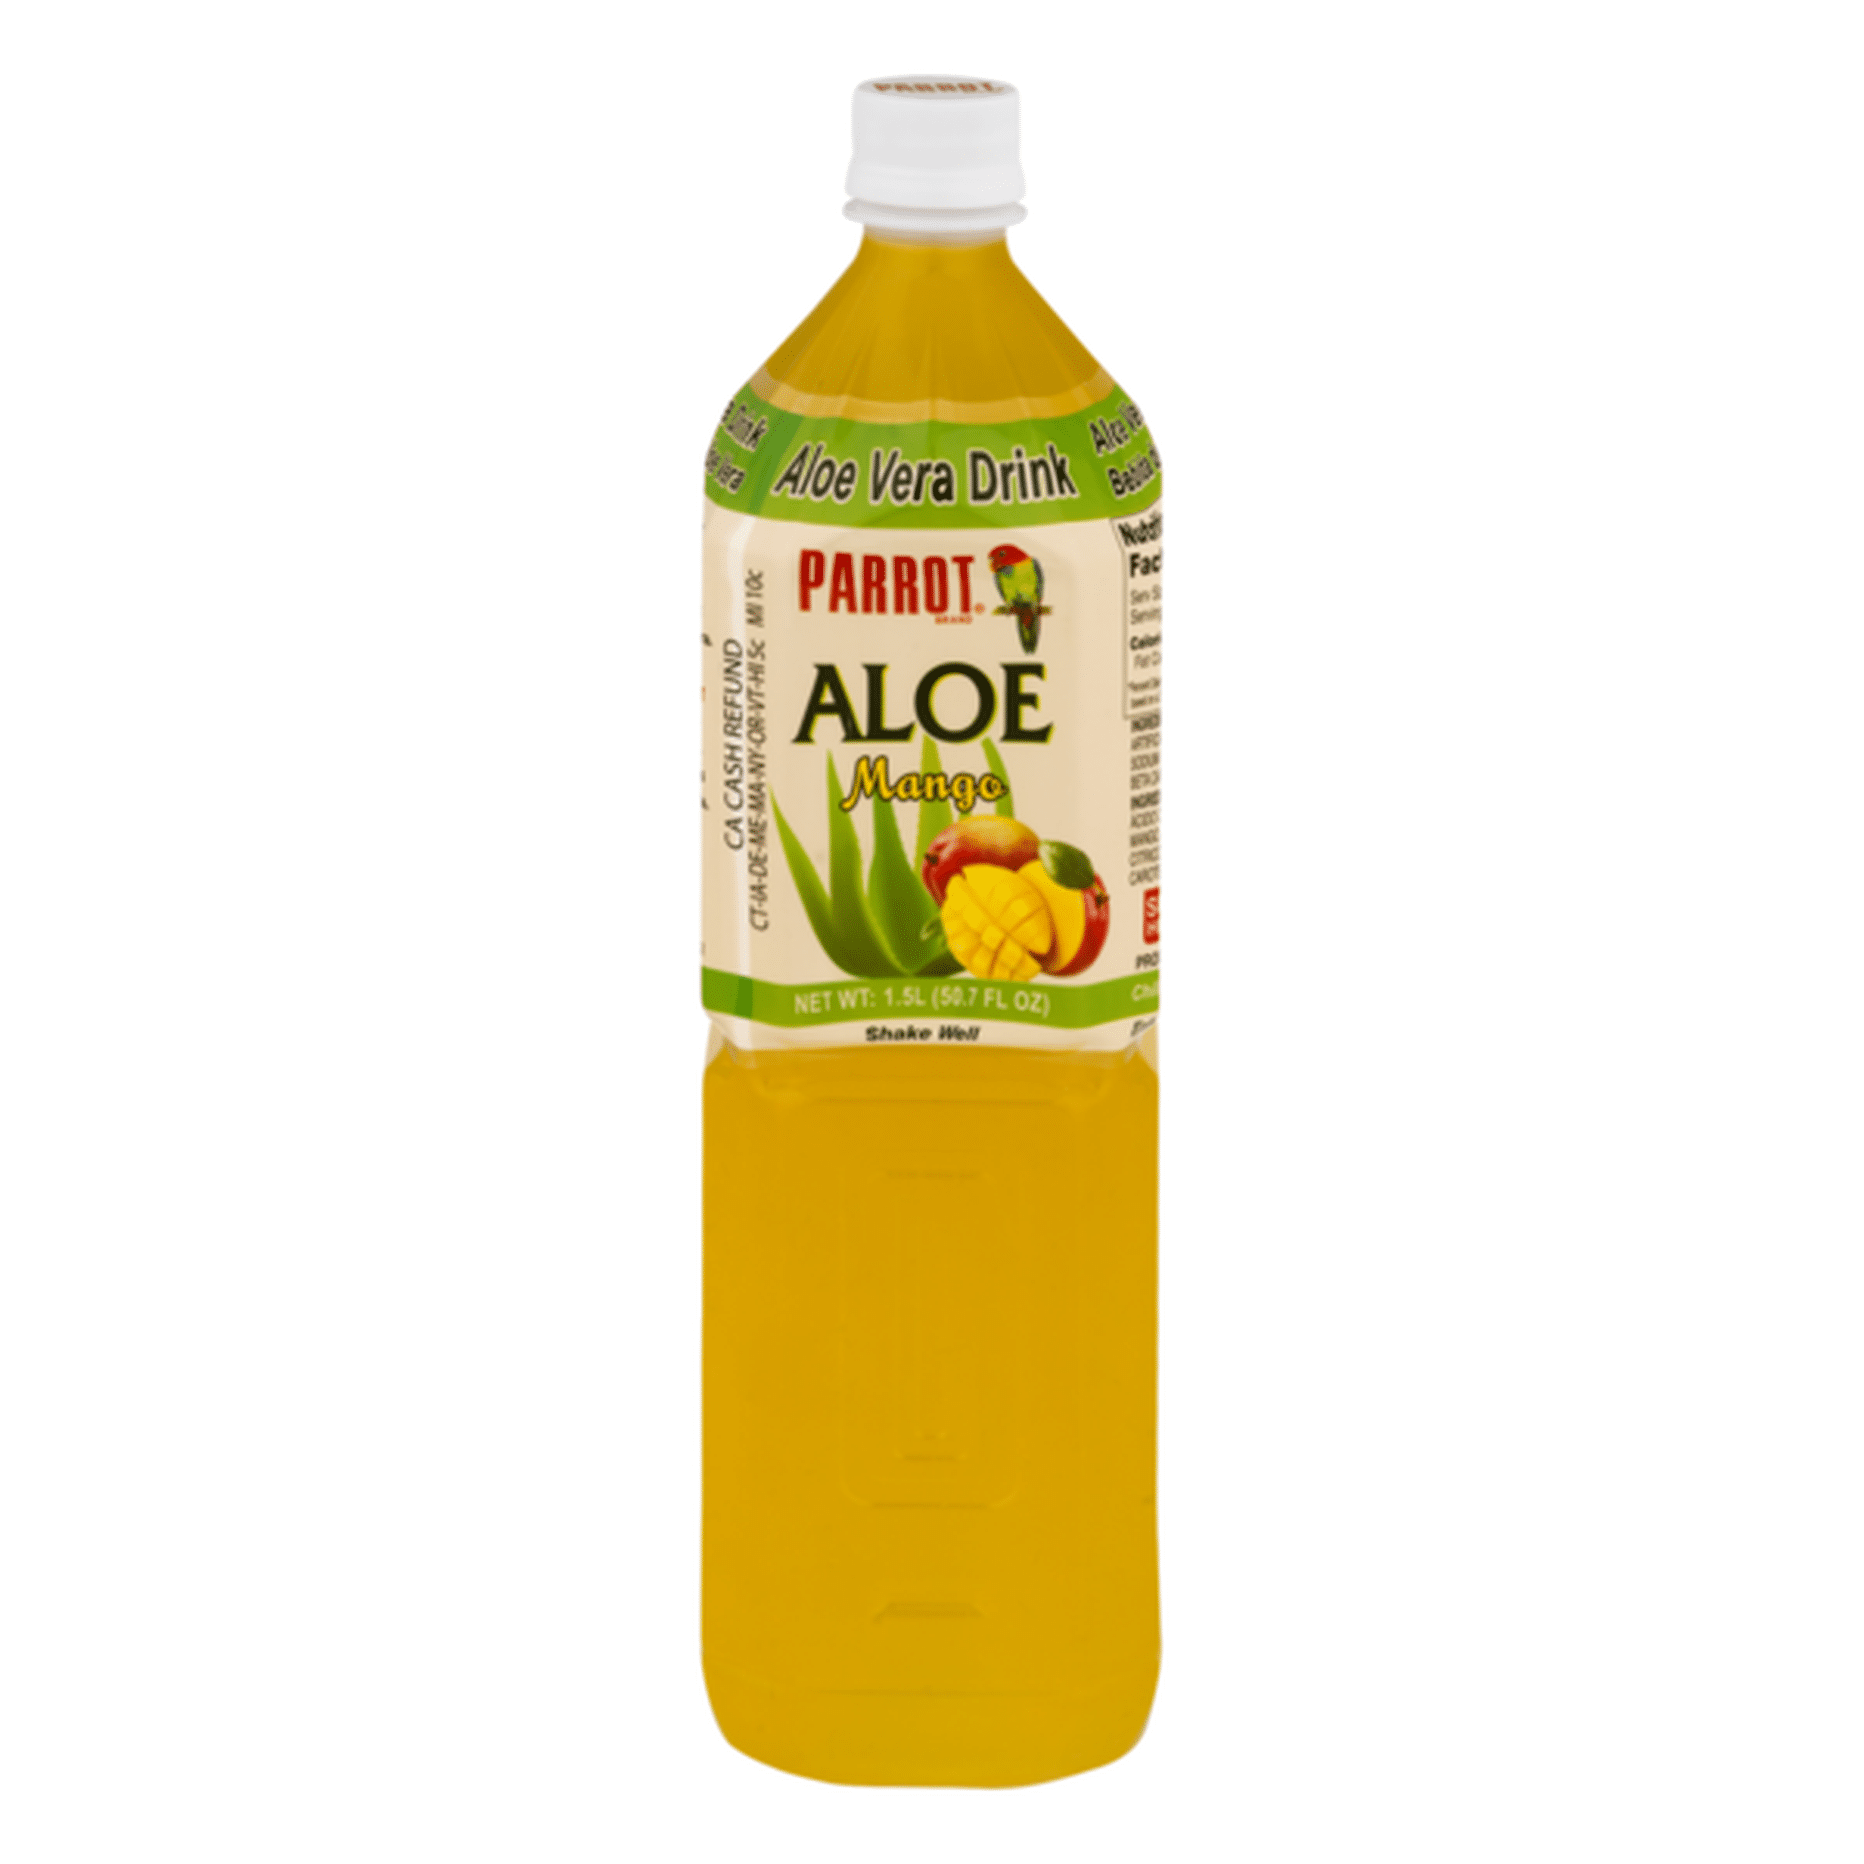 Parrot Aloe Vera Drink Mango 507 Fl Oz Delivery Or Pickup Near Me Instacart 8187